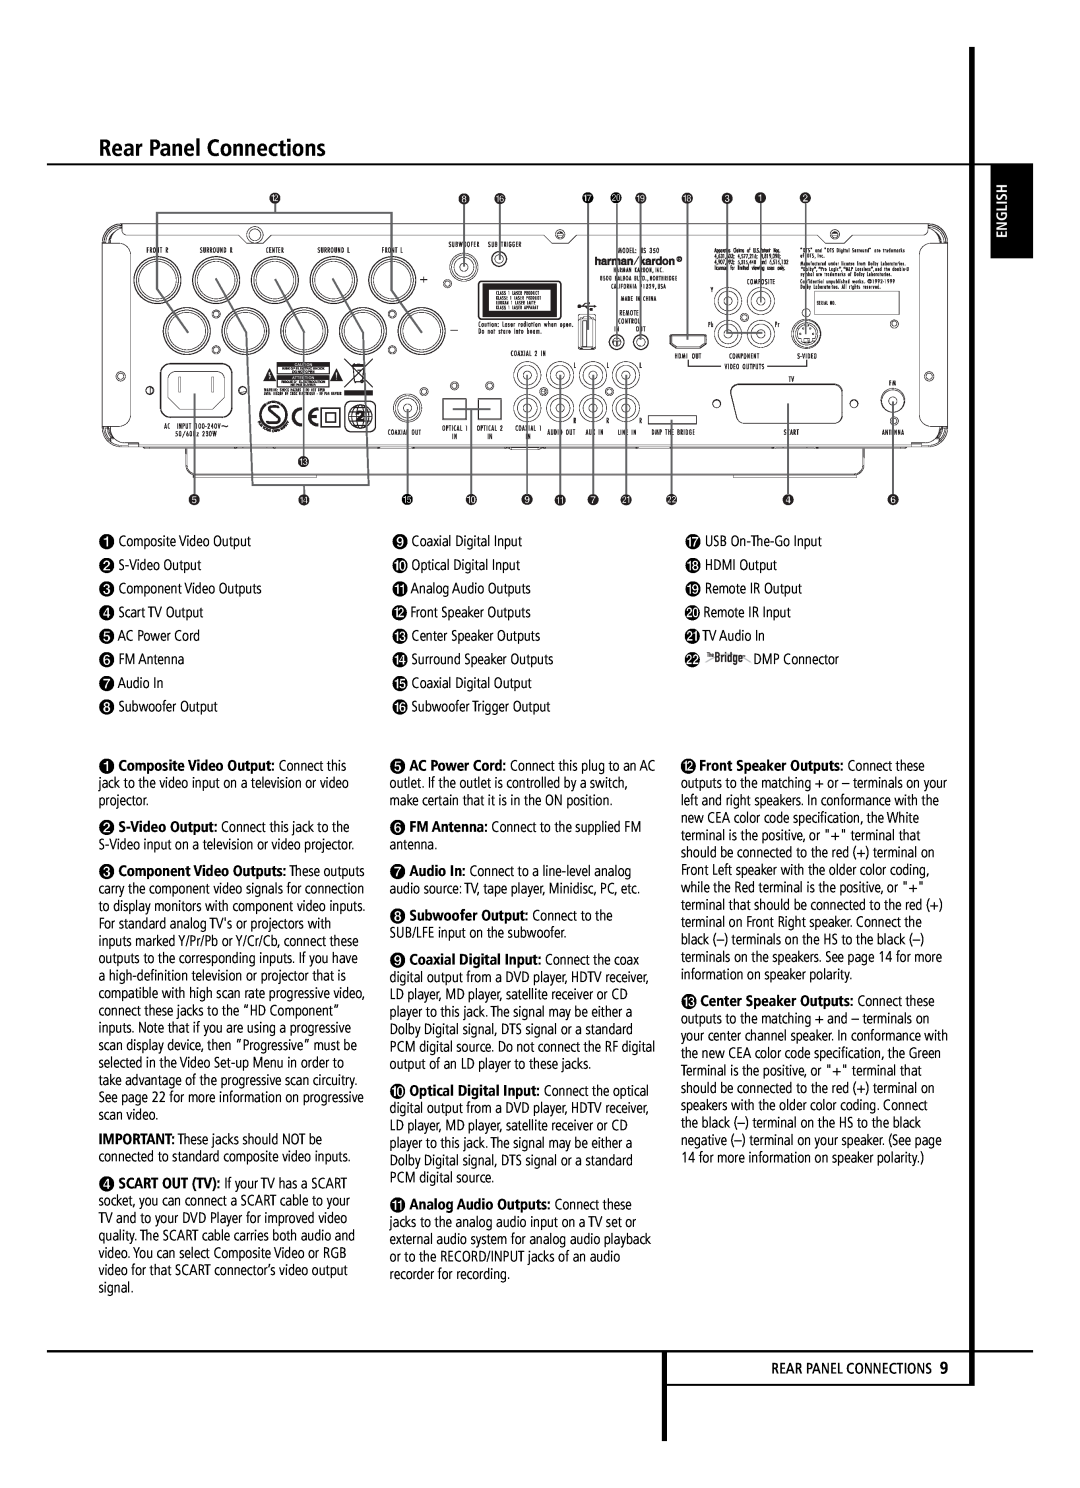 Harman-Kardon HS 350 owner manual Rear Panel Connections, English 